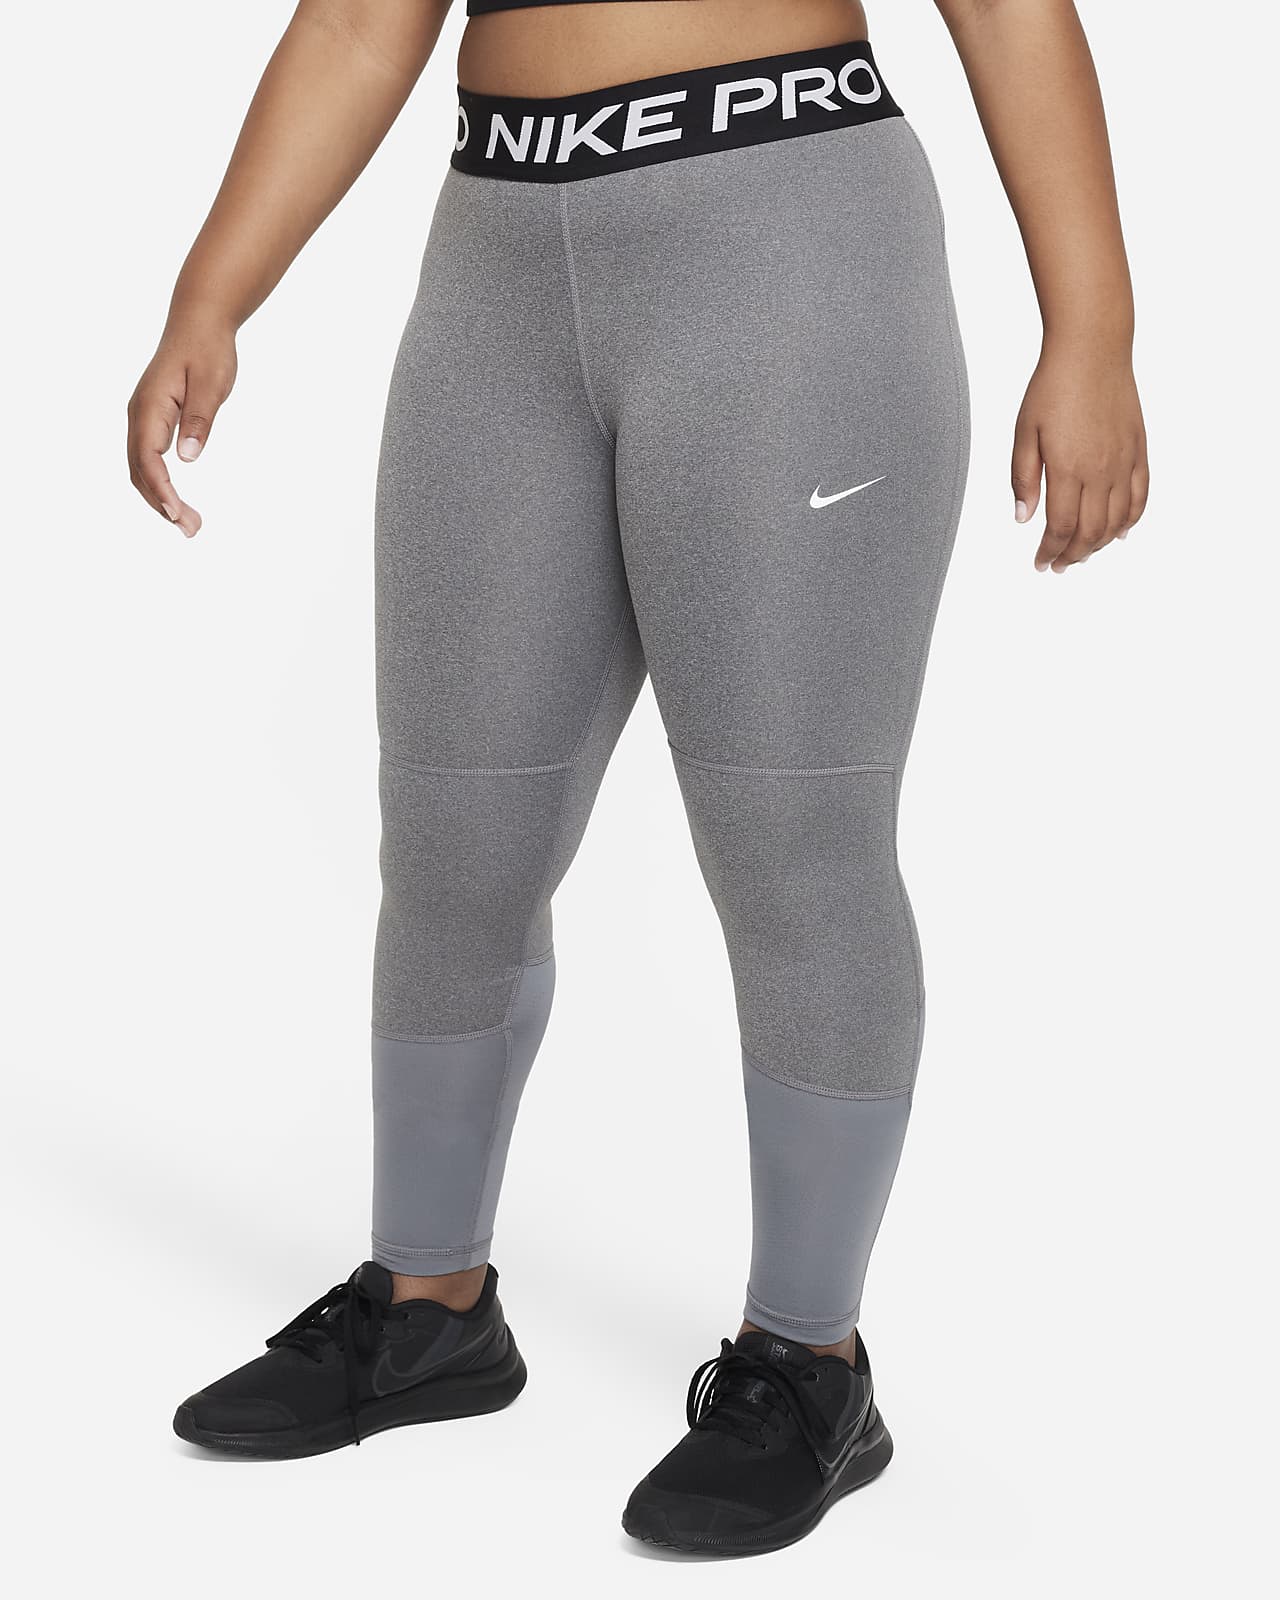 Benigno negar si puedes Nike Pro Older Kids' (Girls') Leggings (Extended Size). Nike UK